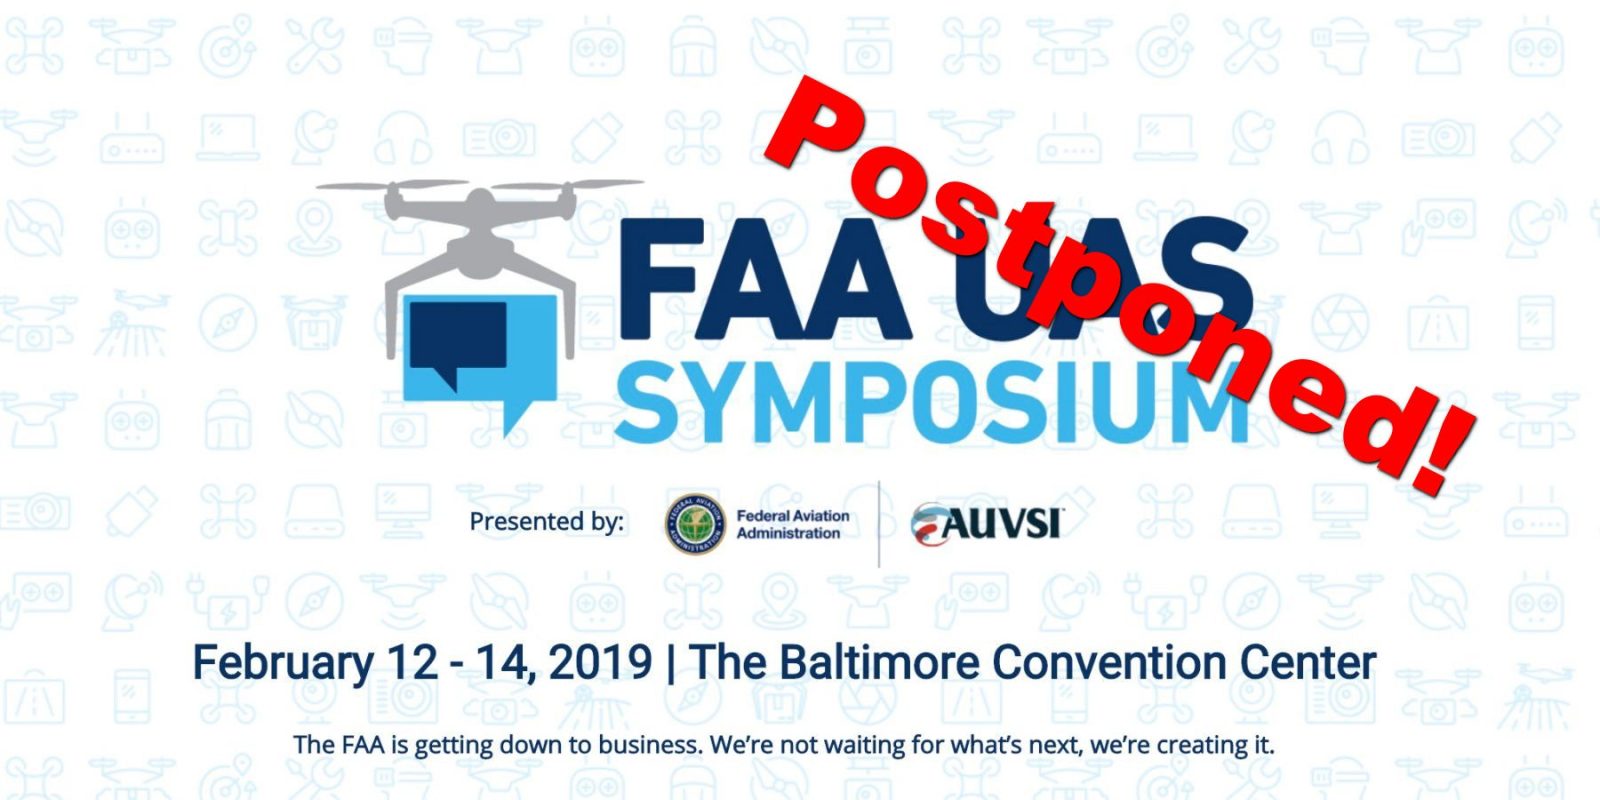 FAA-UAS-Symposium-February-2019-postponed